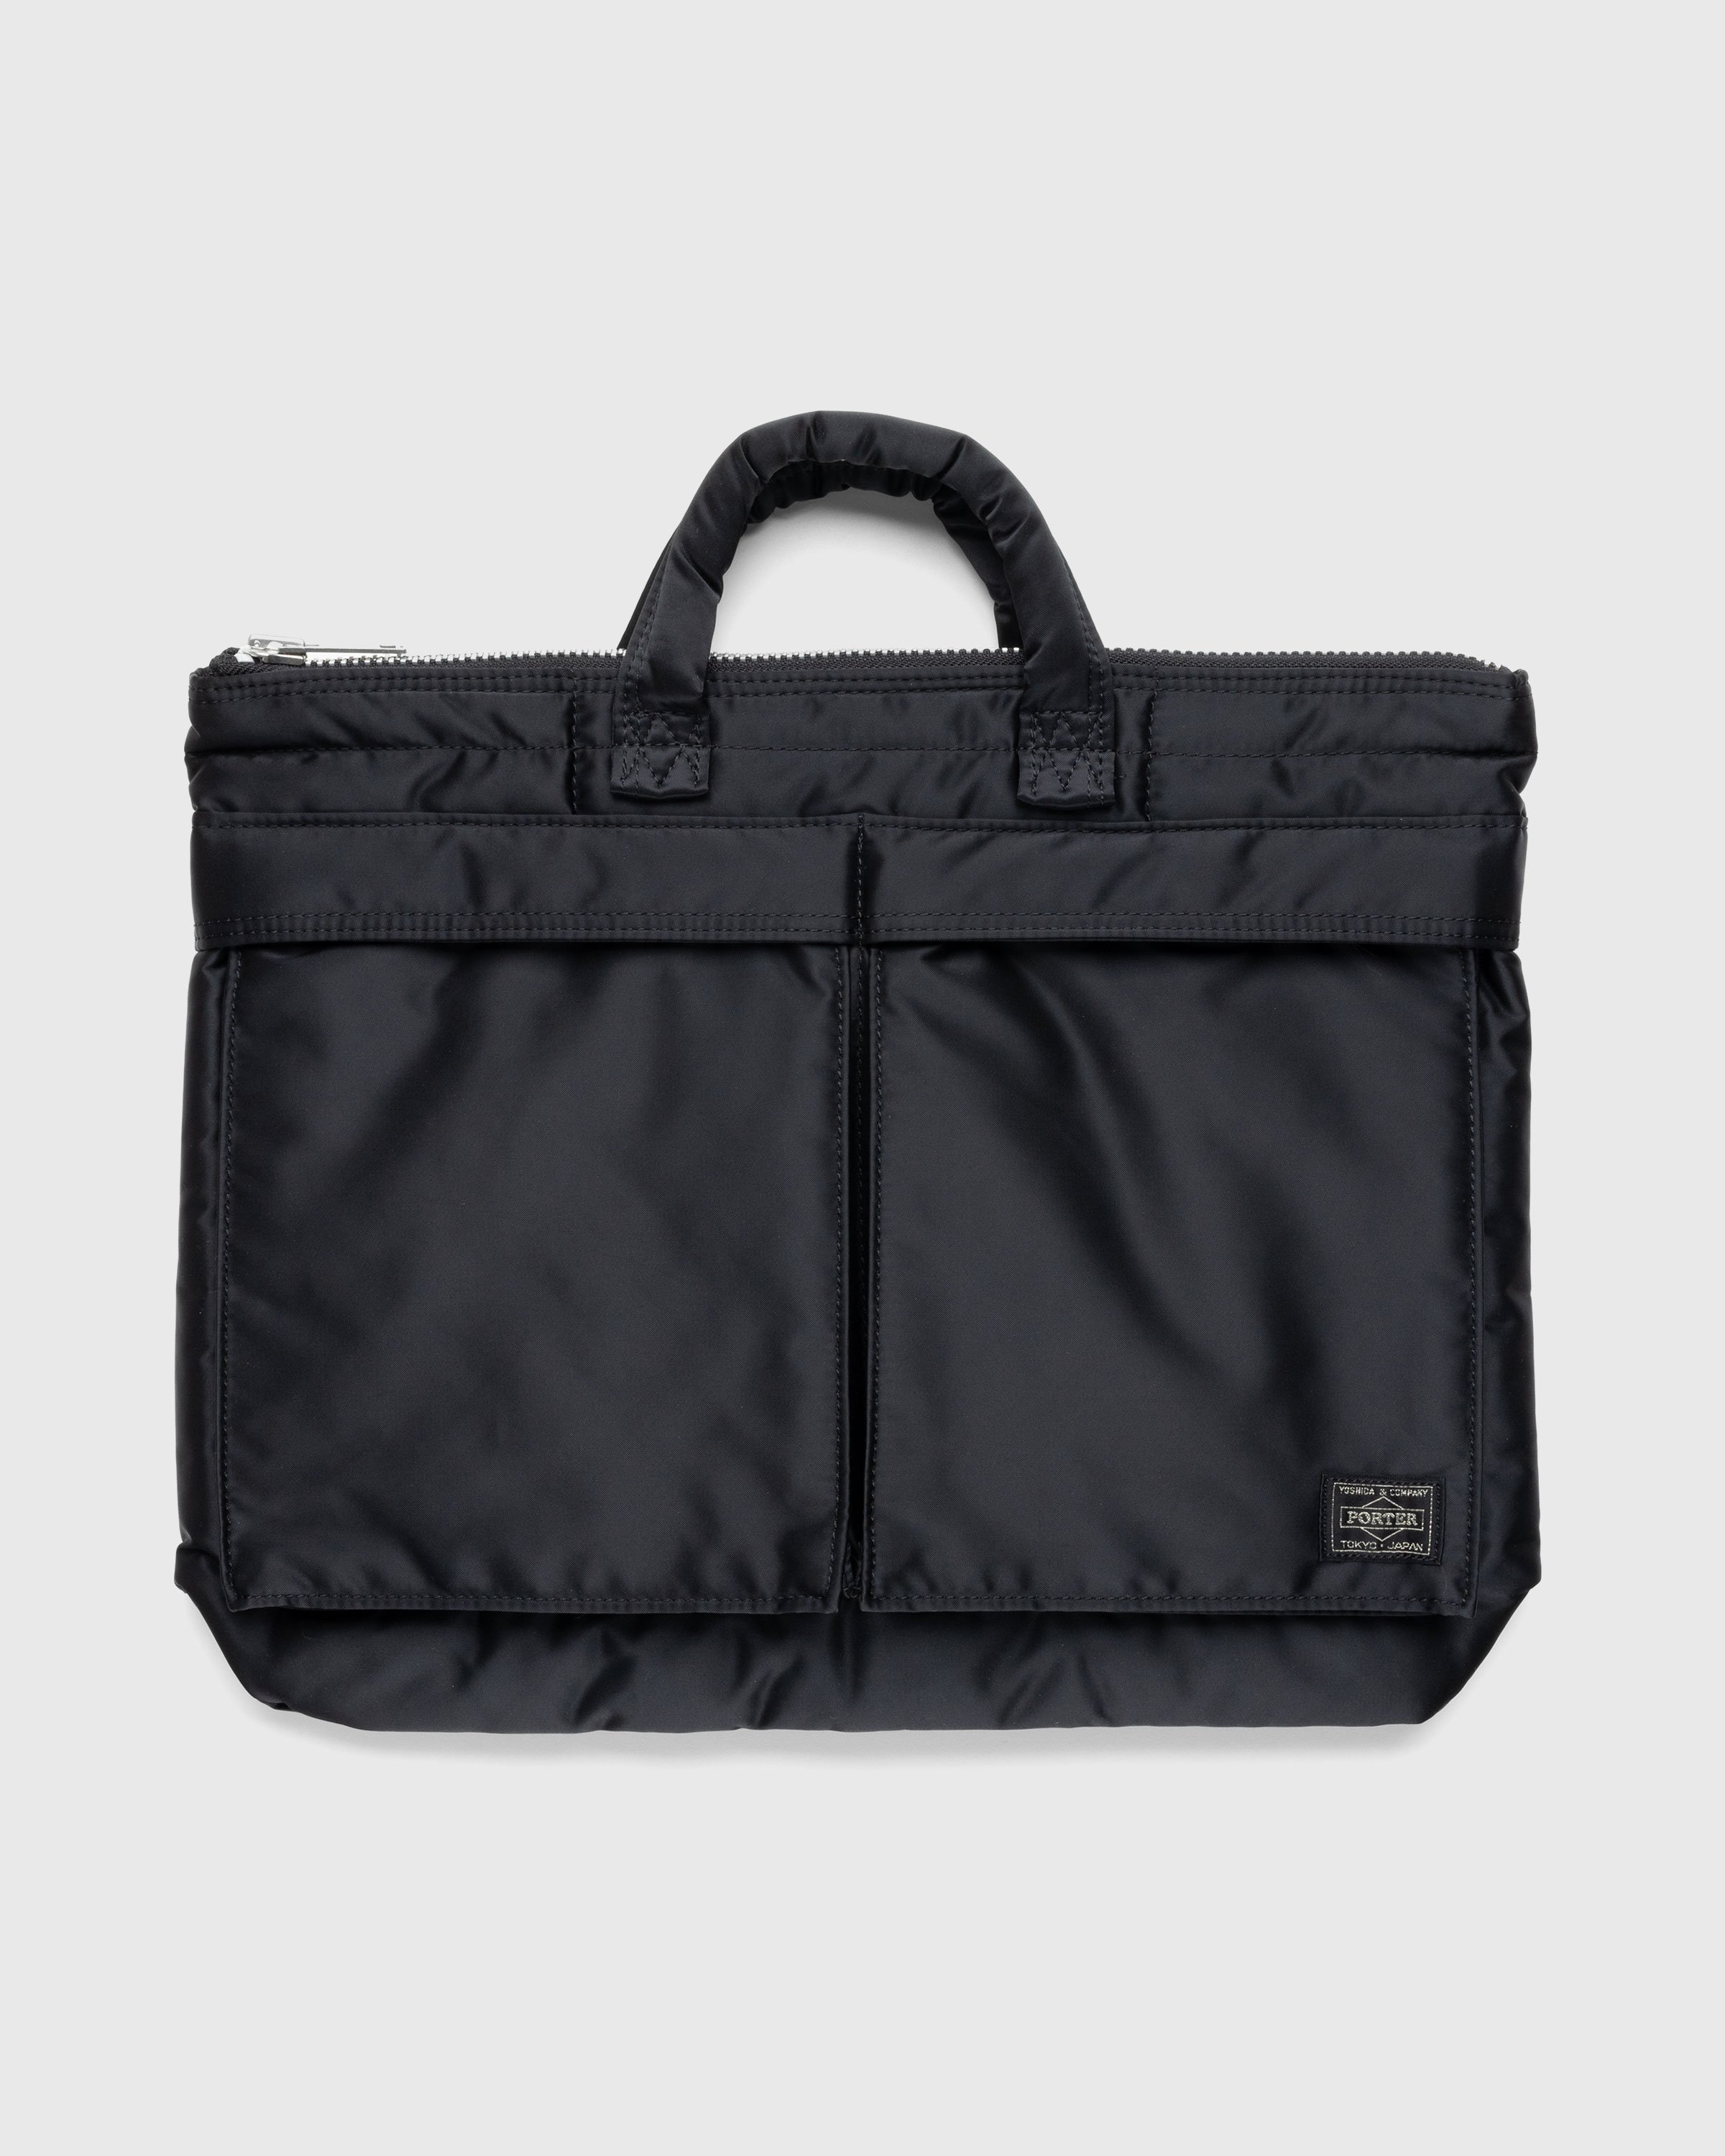 Porter-Yoshida & Co. - TANKER SHORT HELMET BAG (S) - Accessories - Black - Image 1